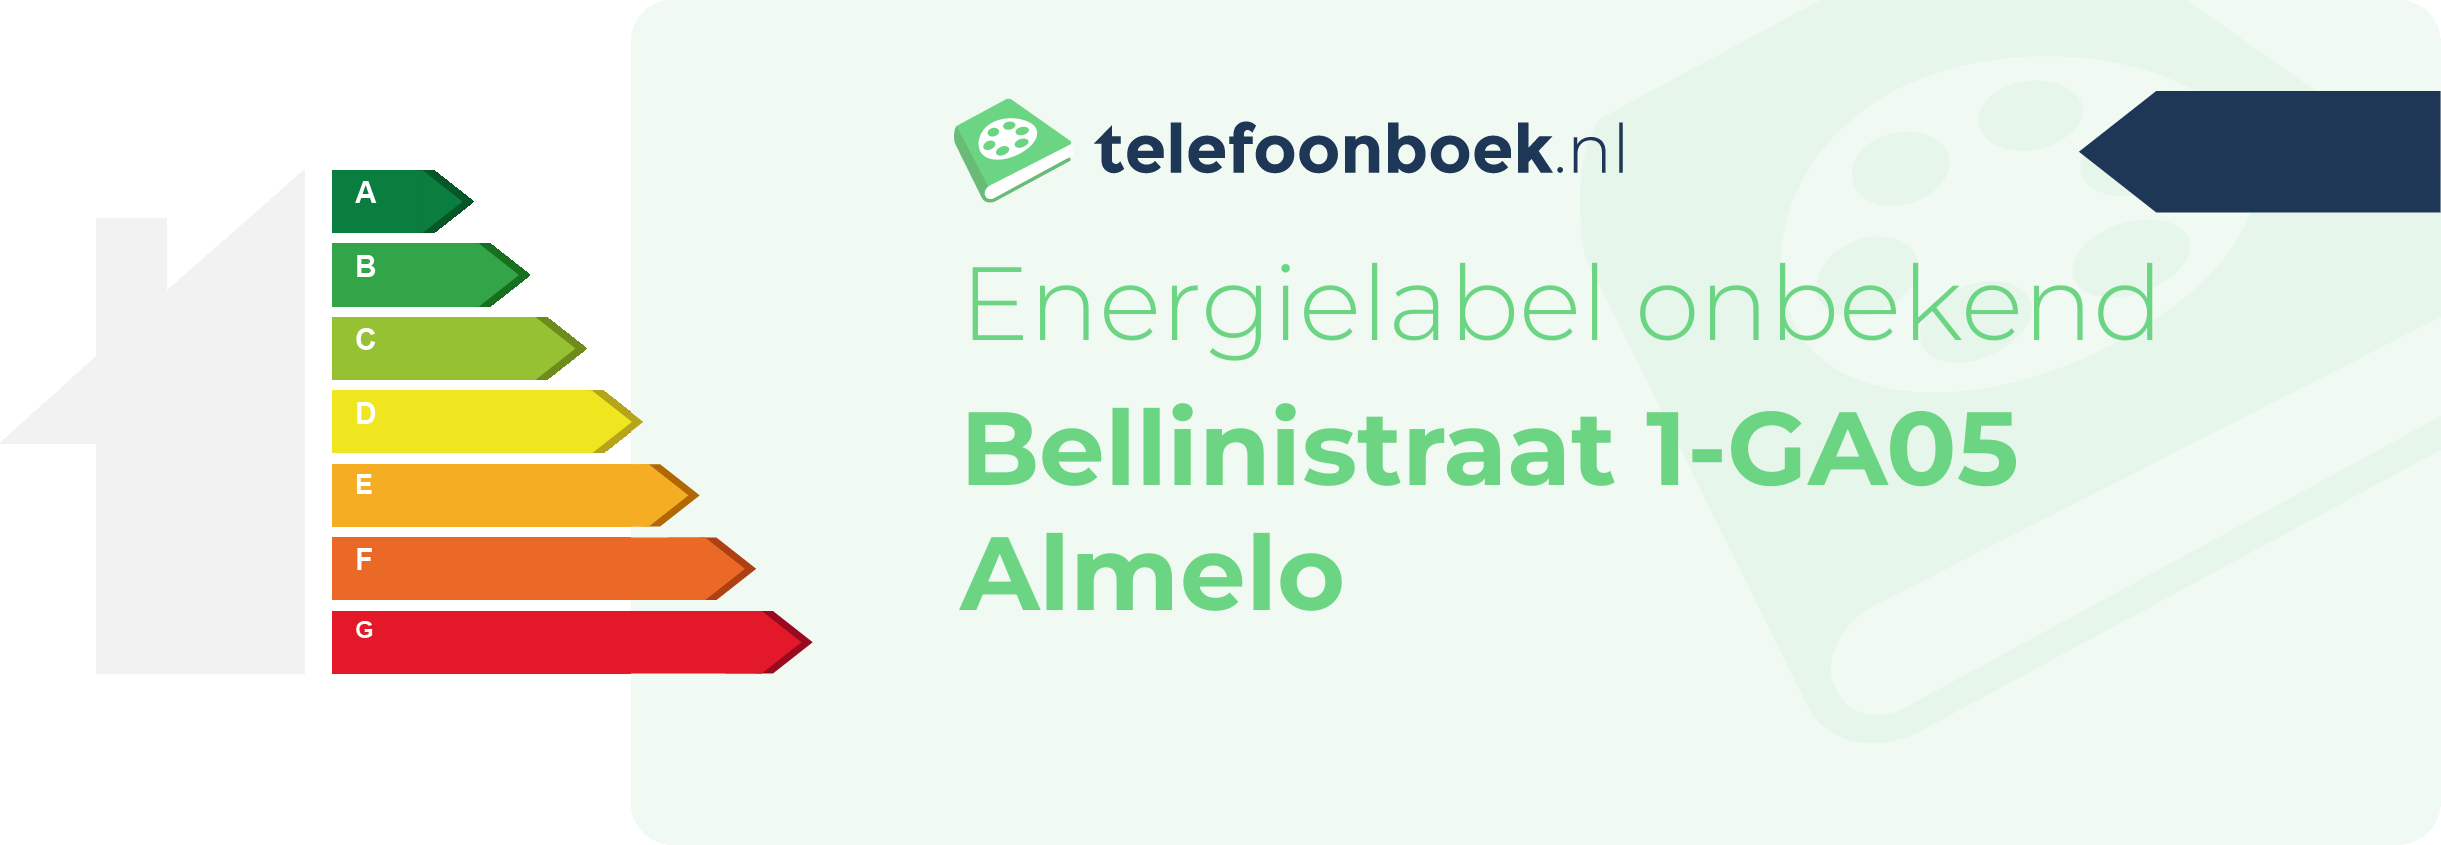 Energielabel Bellinistraat 1-GA05 Almelo